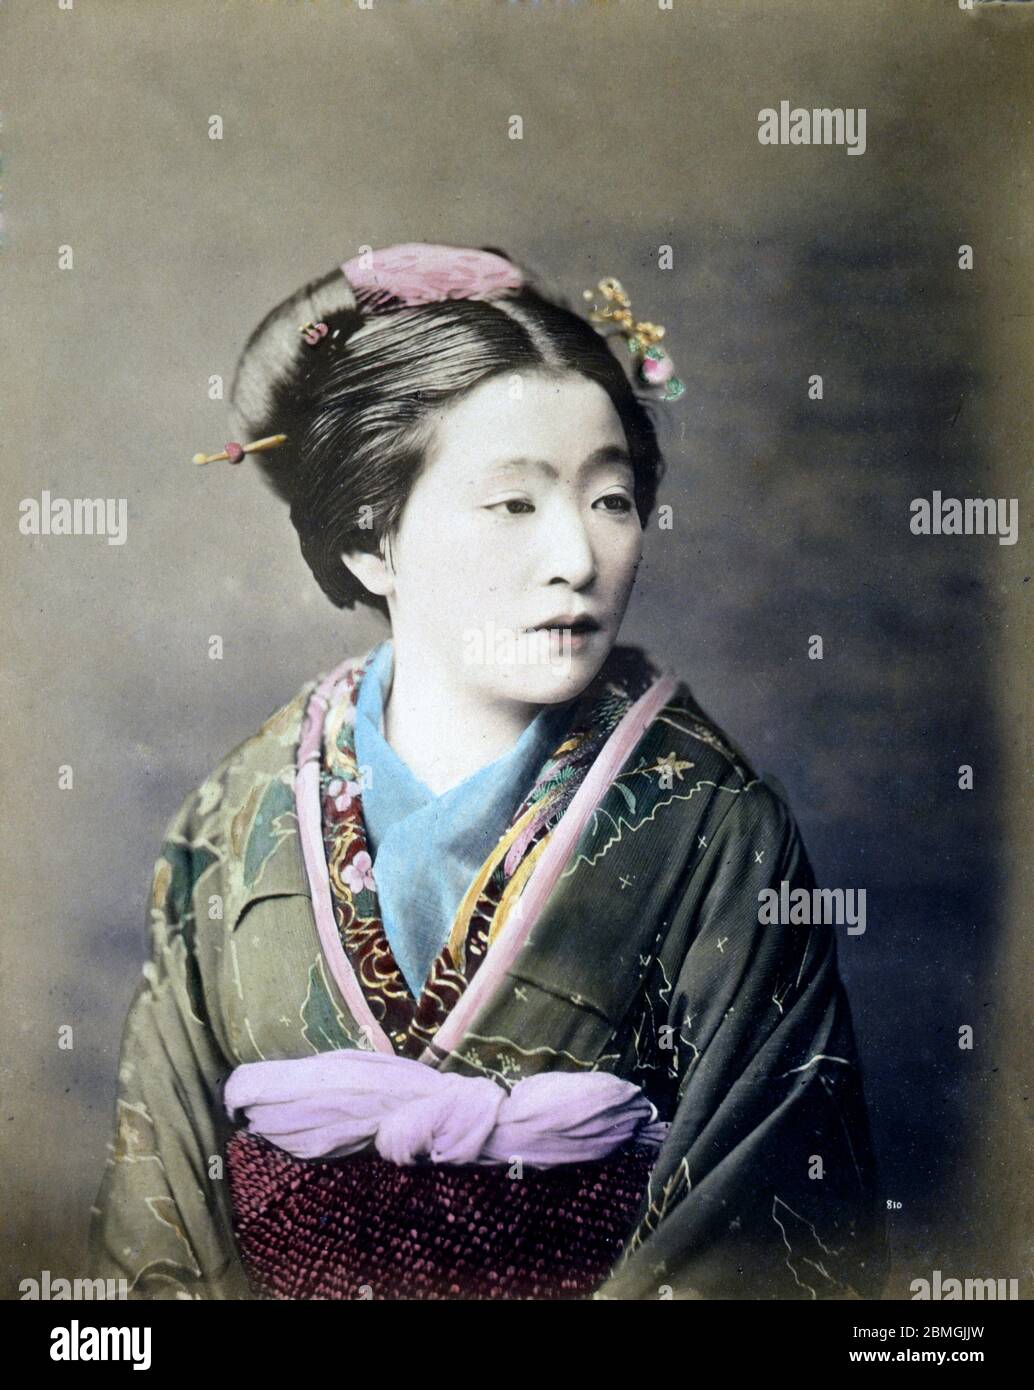 [ 1880s Japan - Japanese Woman in Kimono ] —   Woman in kimono and traditional hairstyle.  19th century vintage albumen photograph. Stock Photo